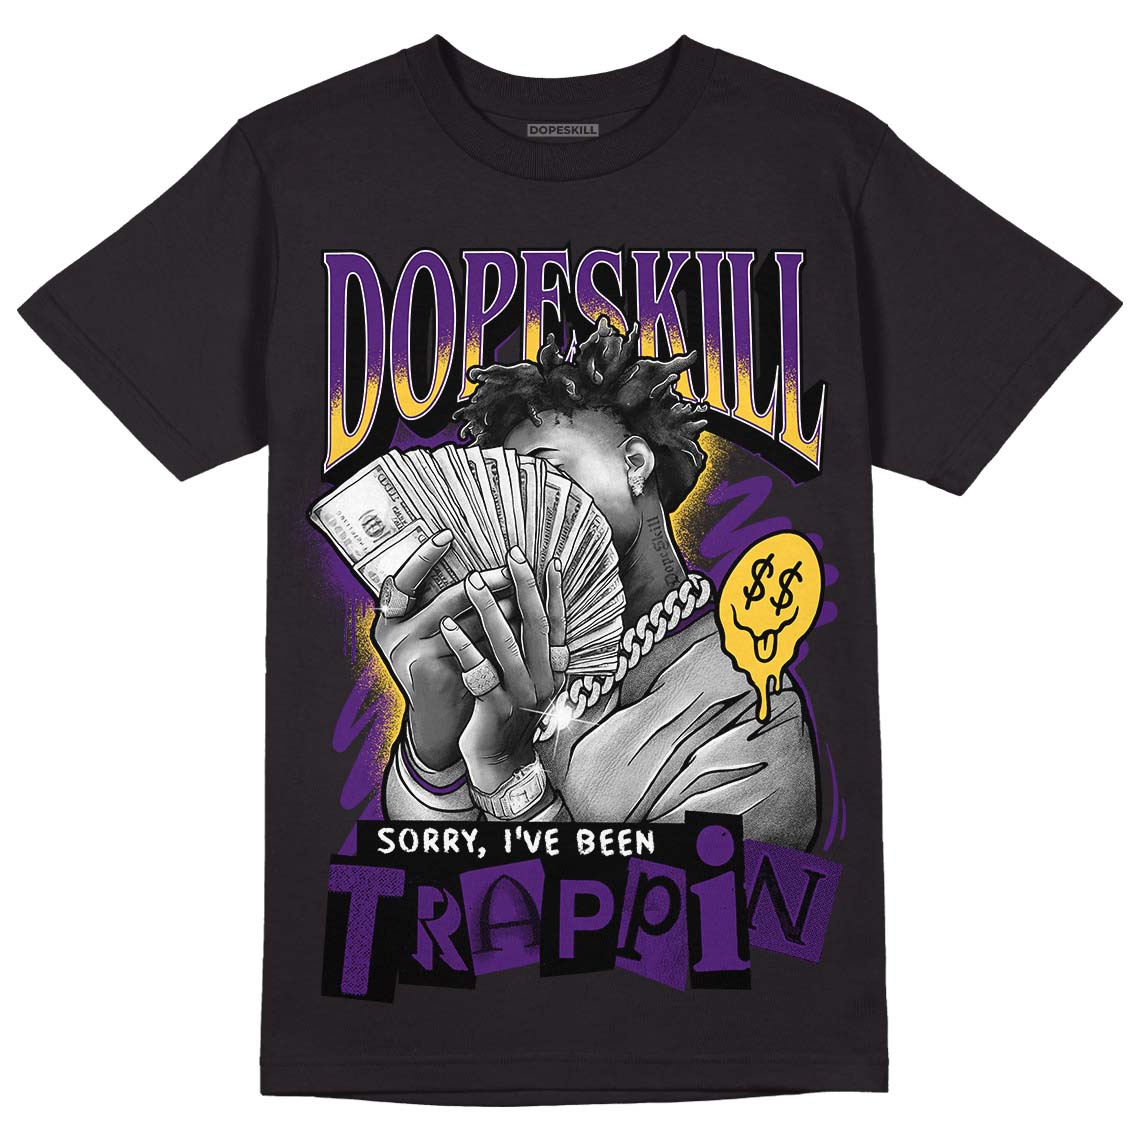 Jordan 12 “Field Purple” DopeSkill T-Shirt Sorry I've Been Trappin Graphic Streetwear - Black